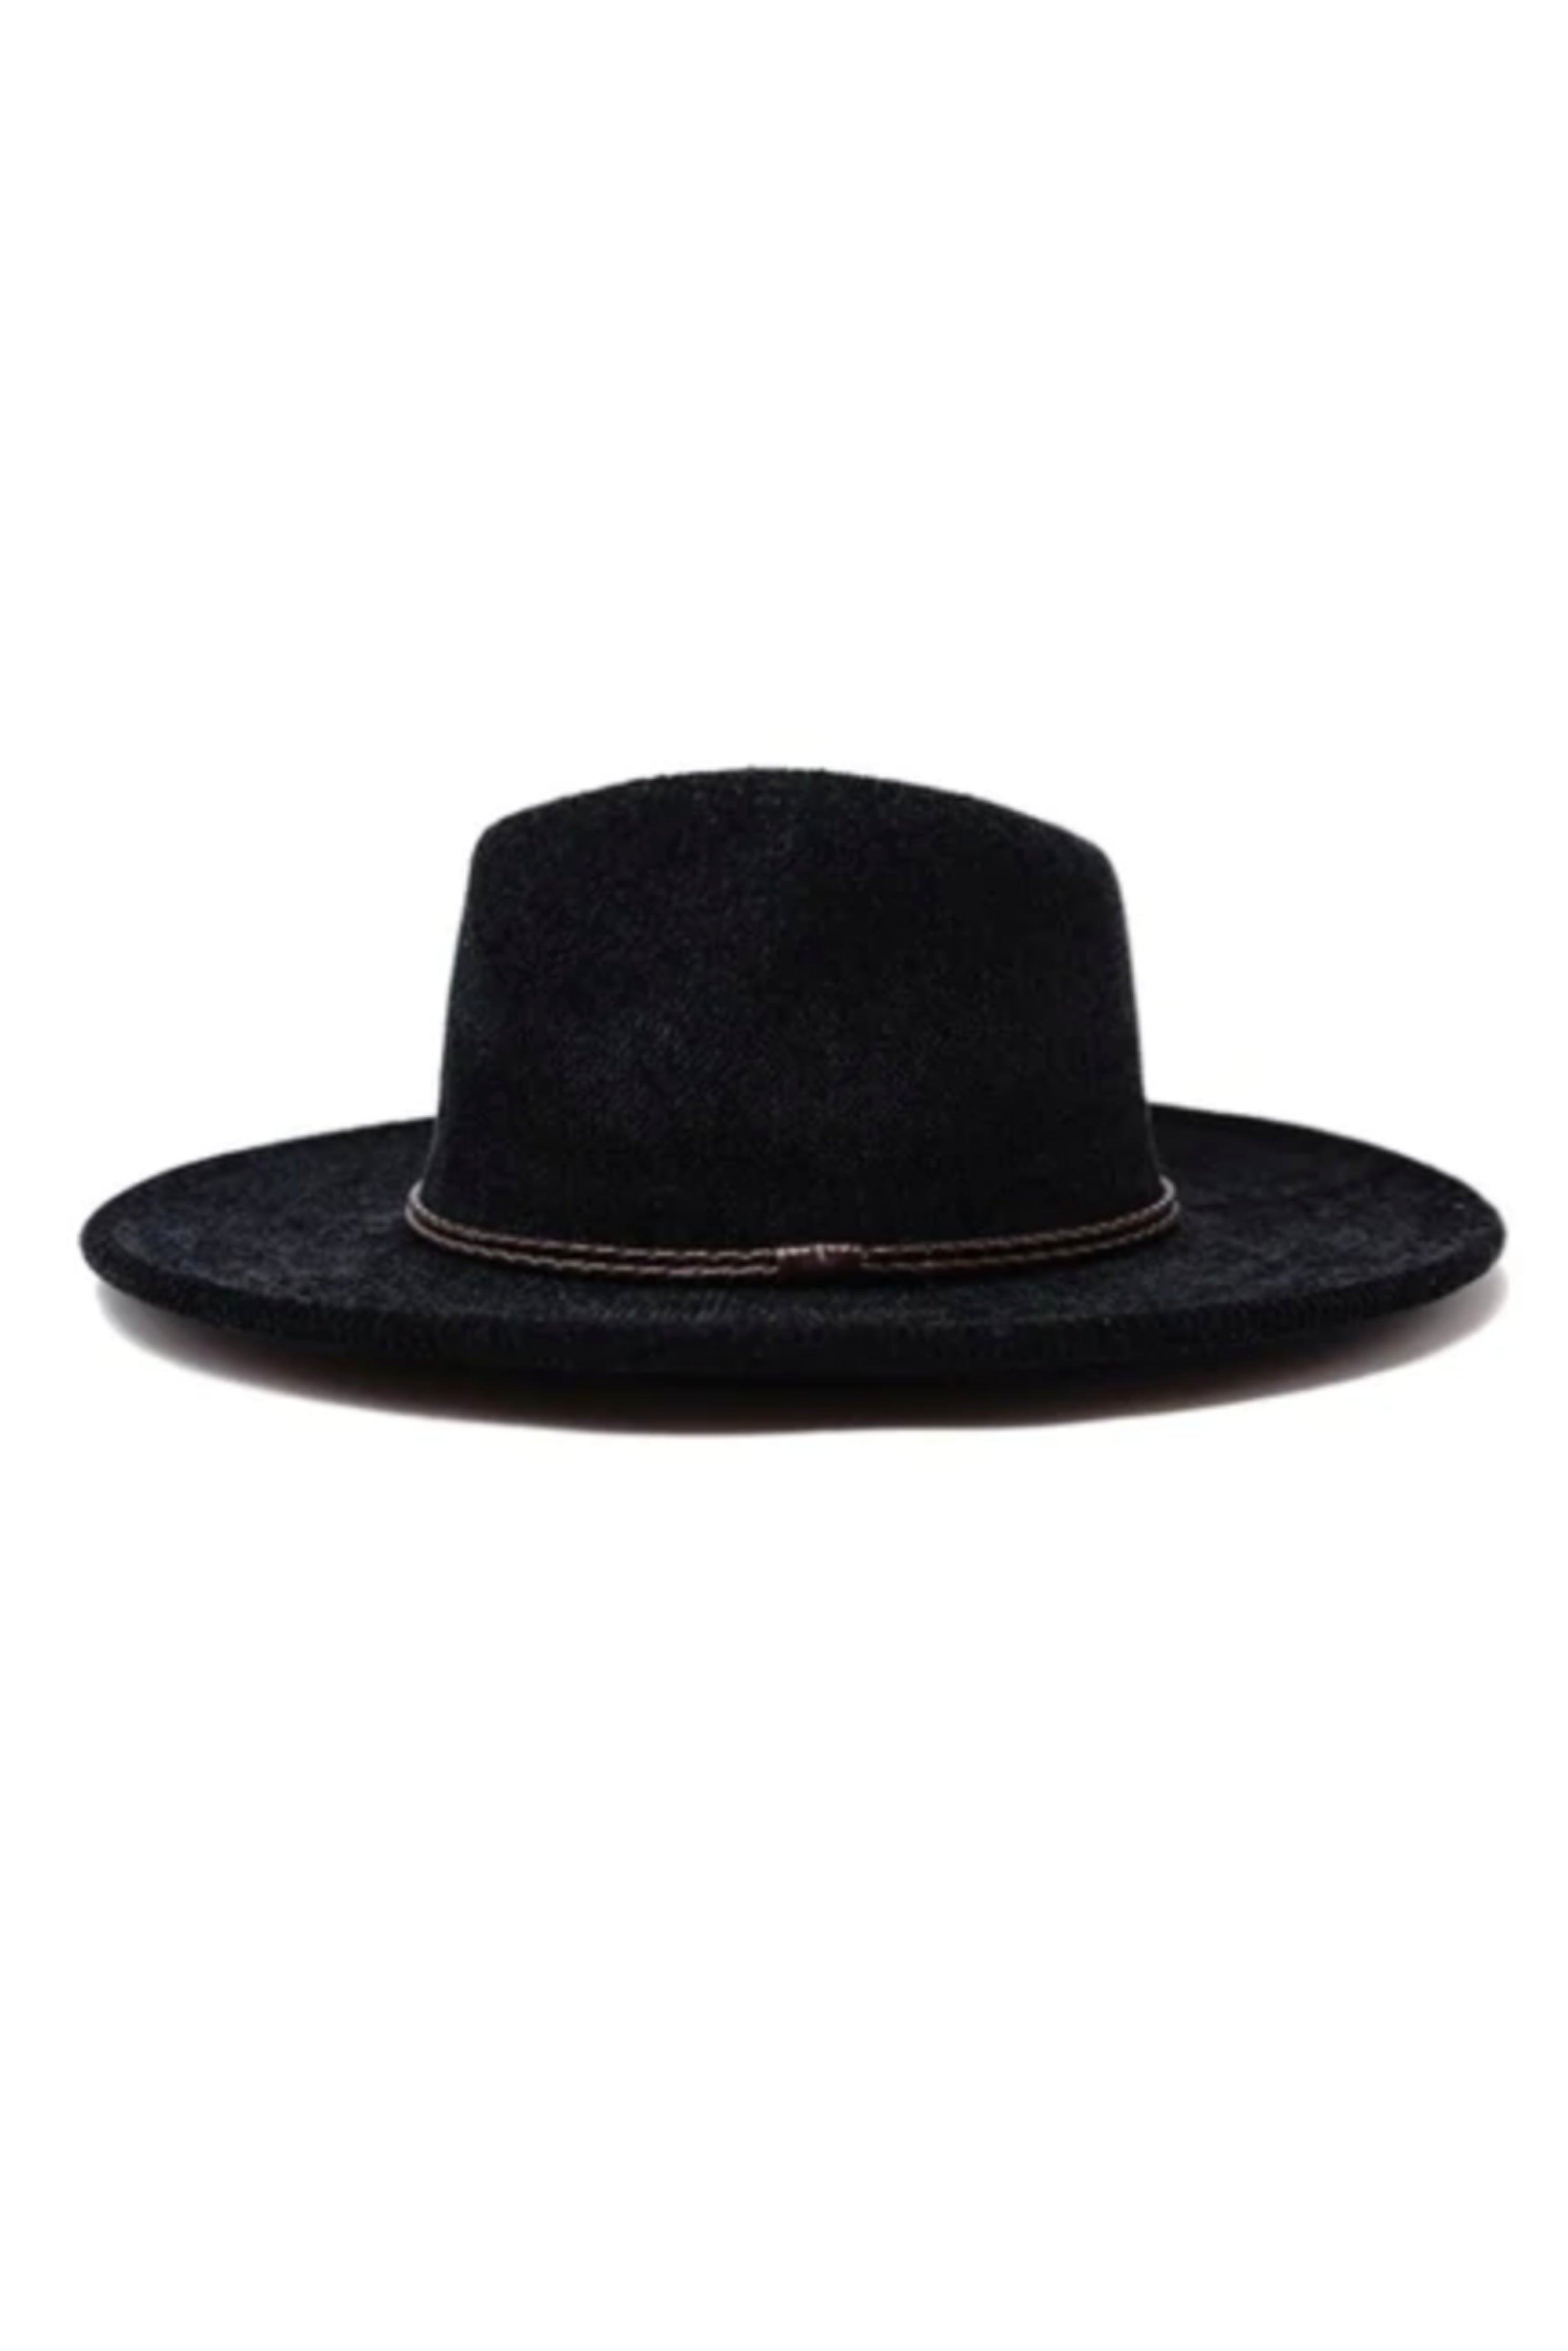 Colette Hat